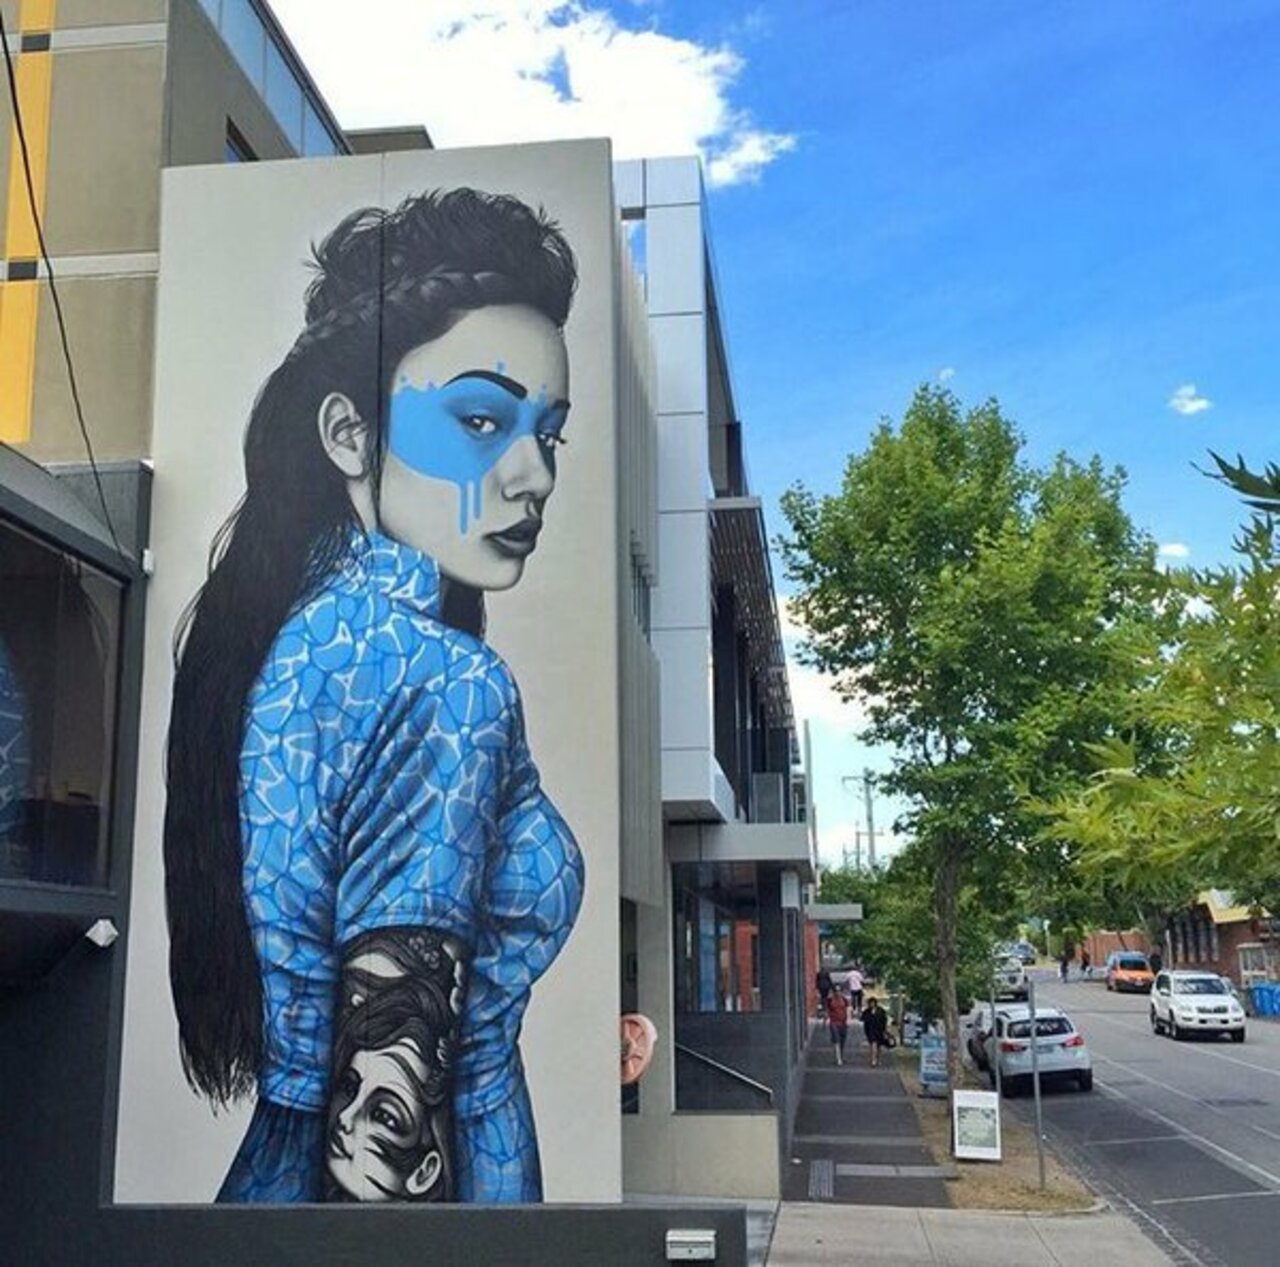 New Street Art • Findac Found in Melbourne #art #mural #graffiti #streetart https://t.co/K964dbuT80